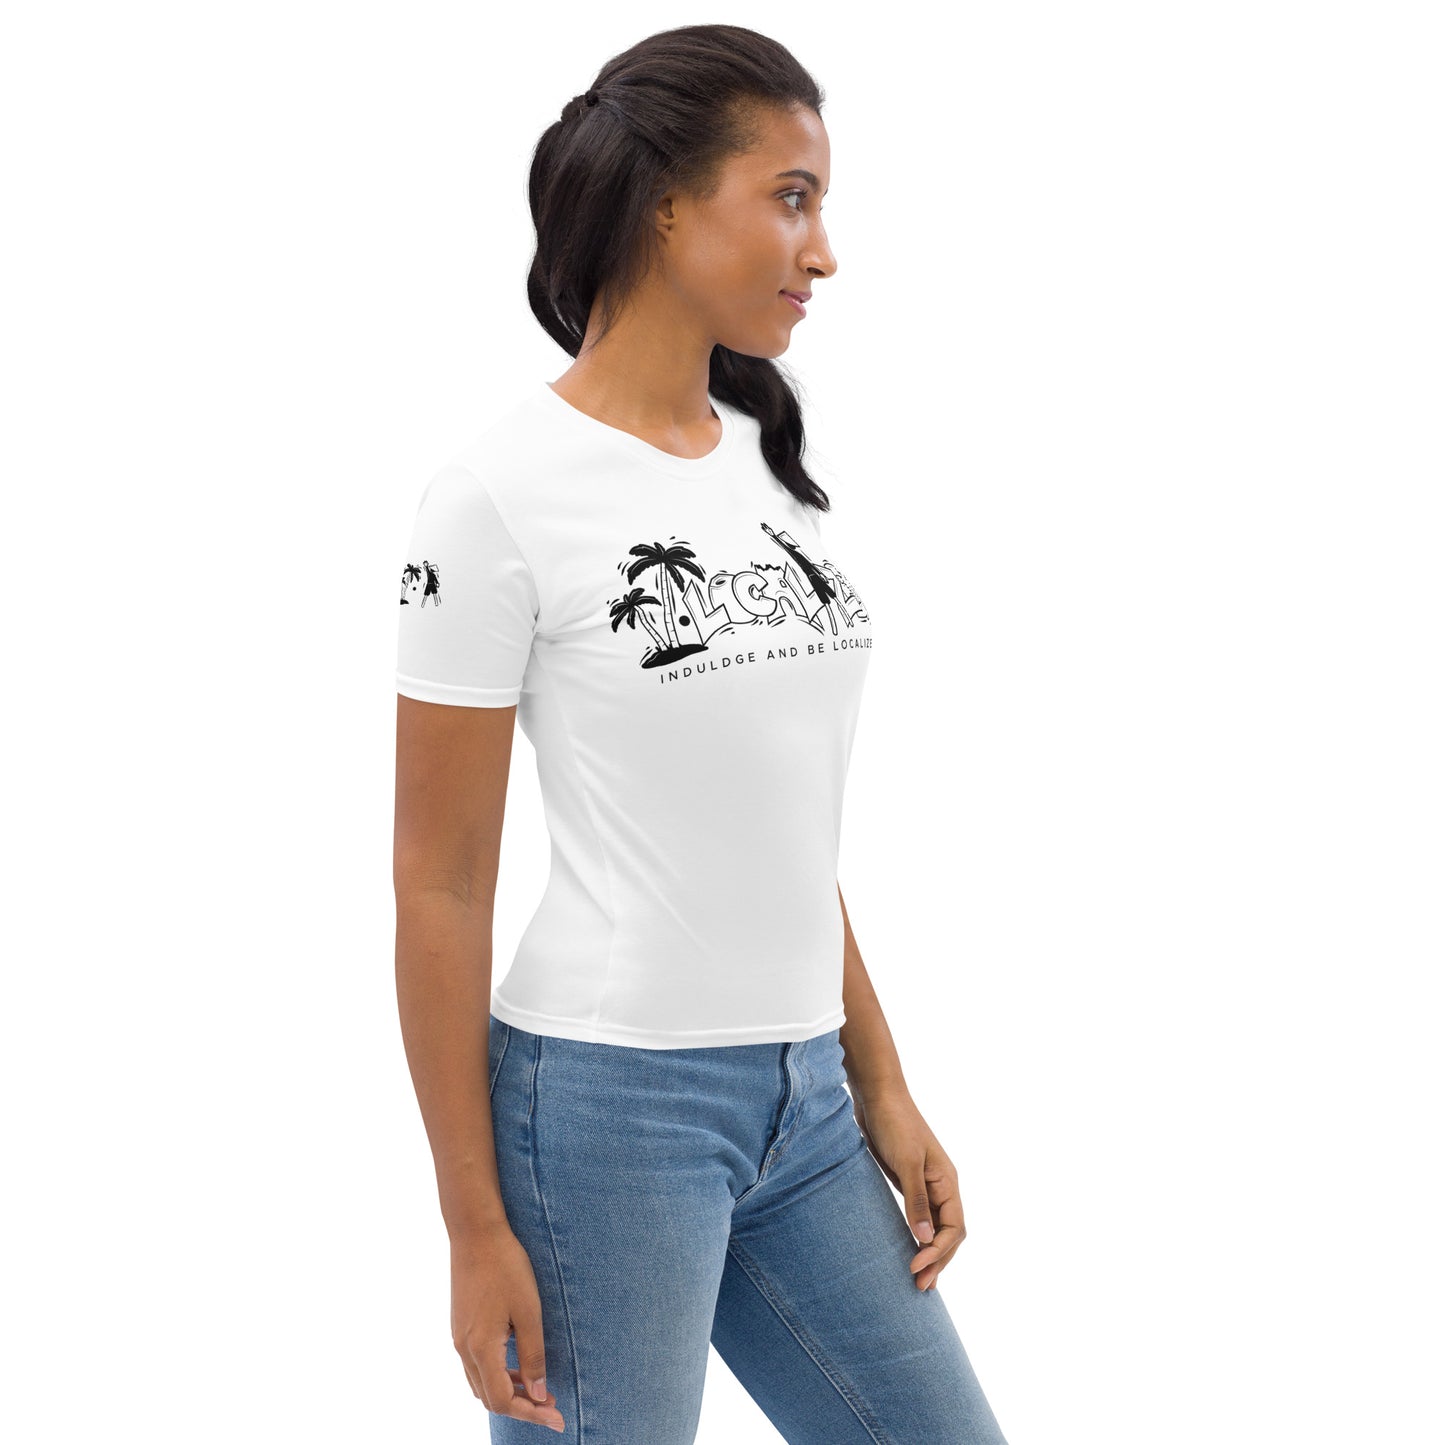 White V.Localized (Black/White) Women’s Dry-Fit T-Shirt